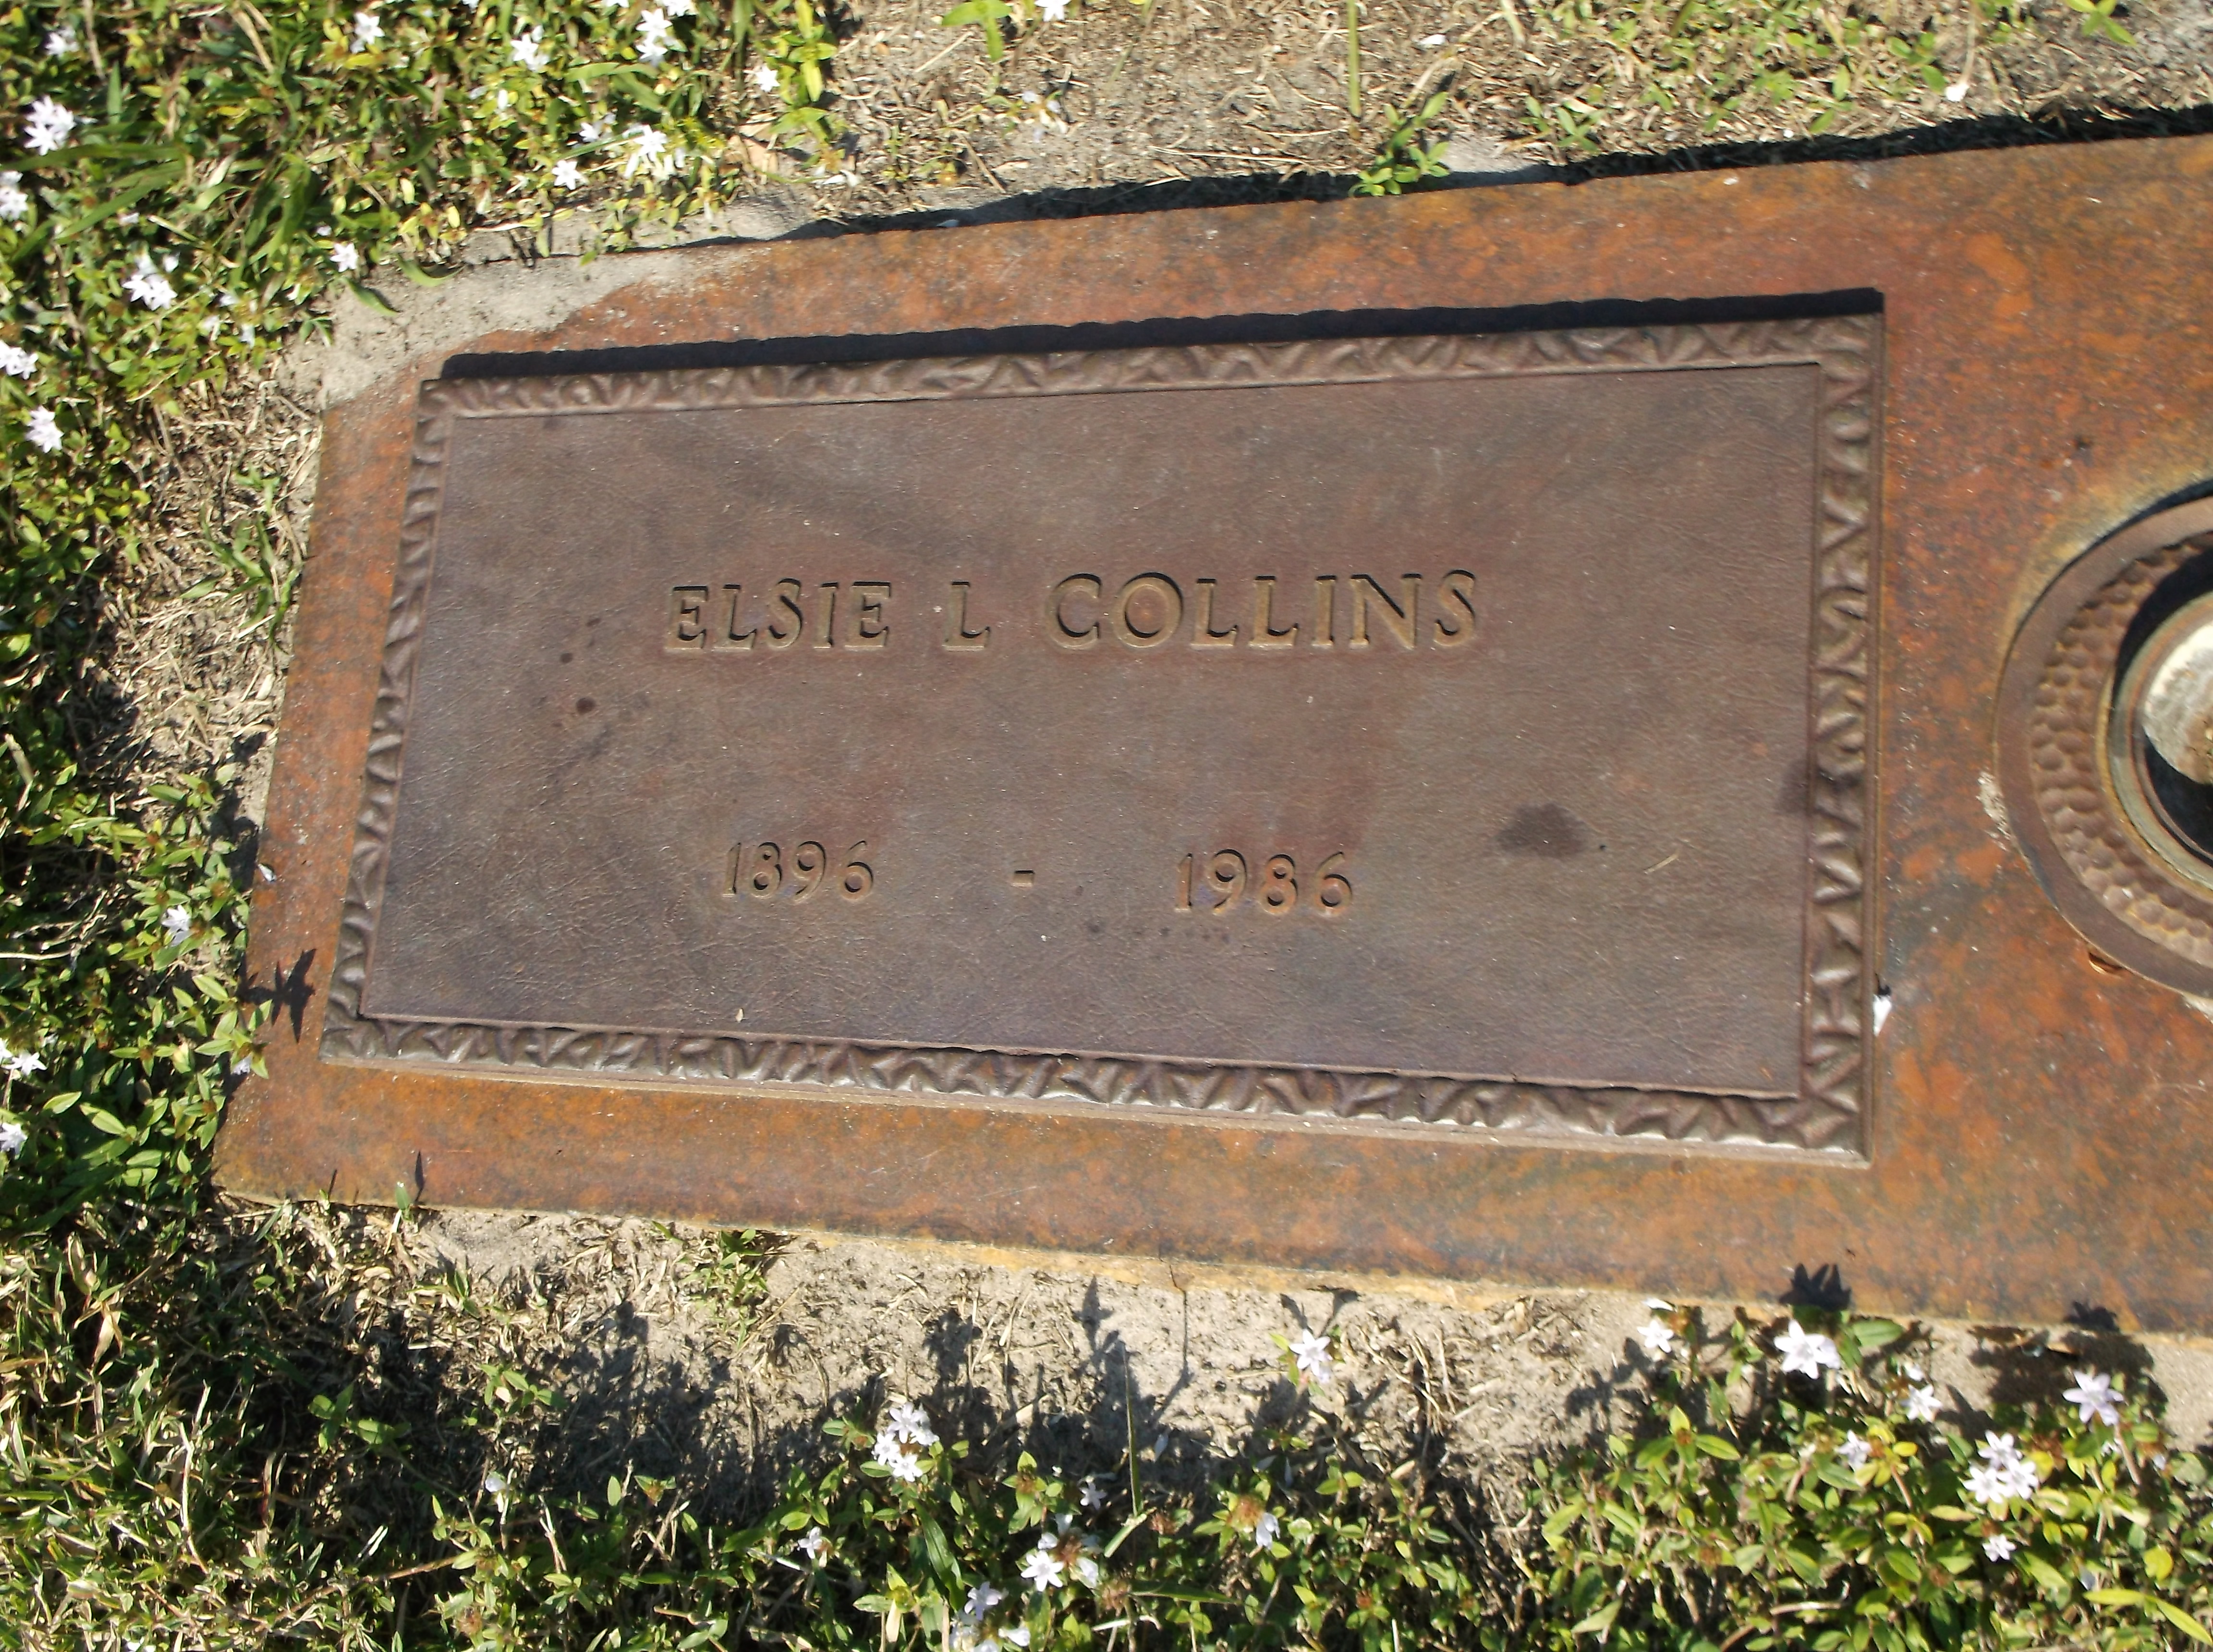 Elsie L Collins